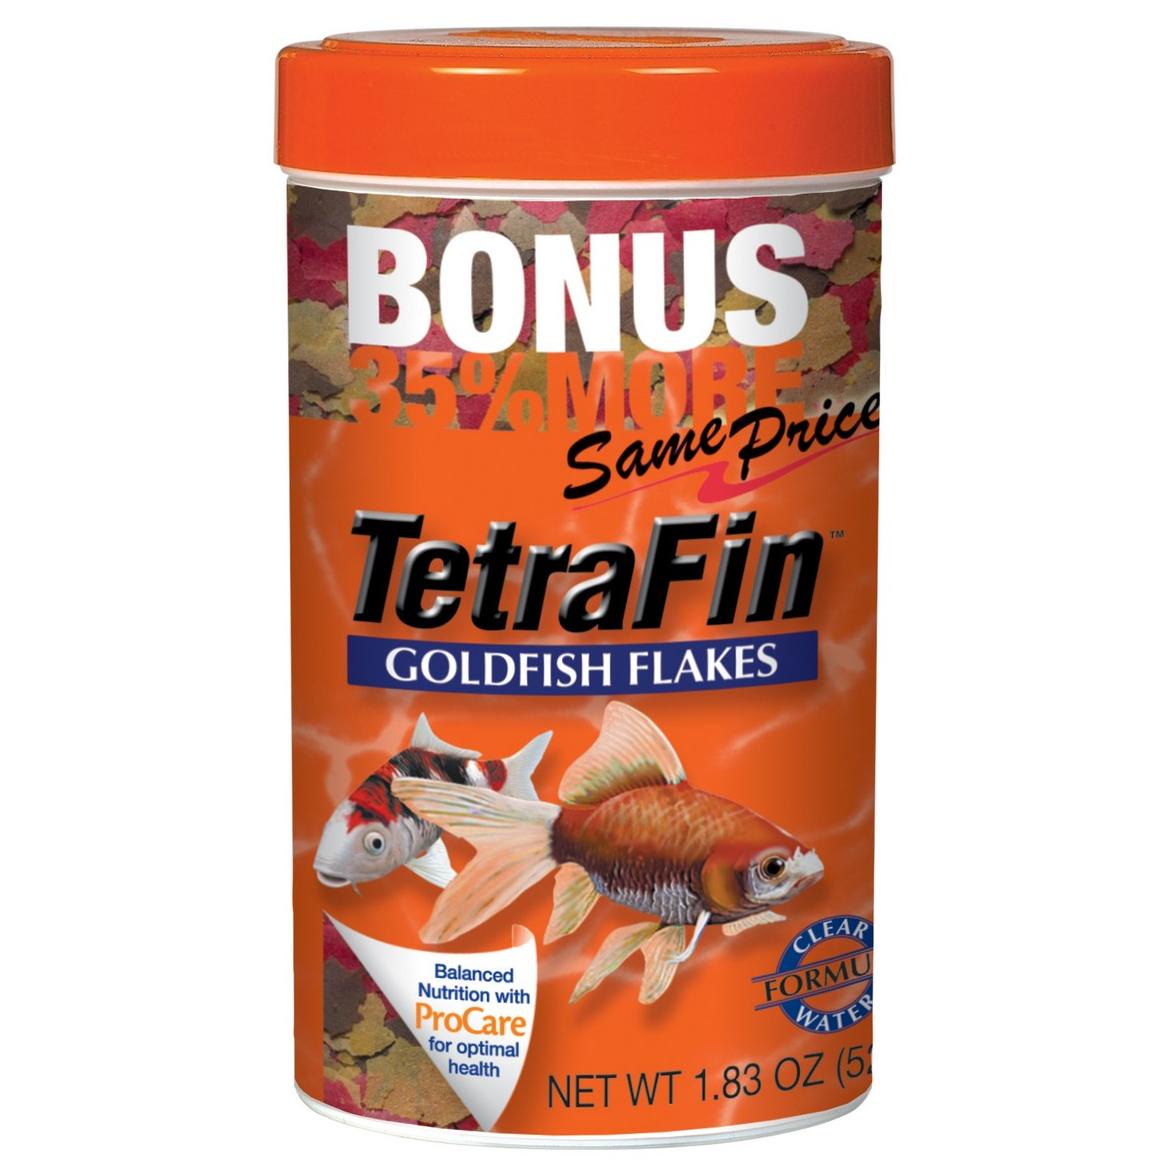 Tetra Goldfish Flake 200g Fish Food for sale online